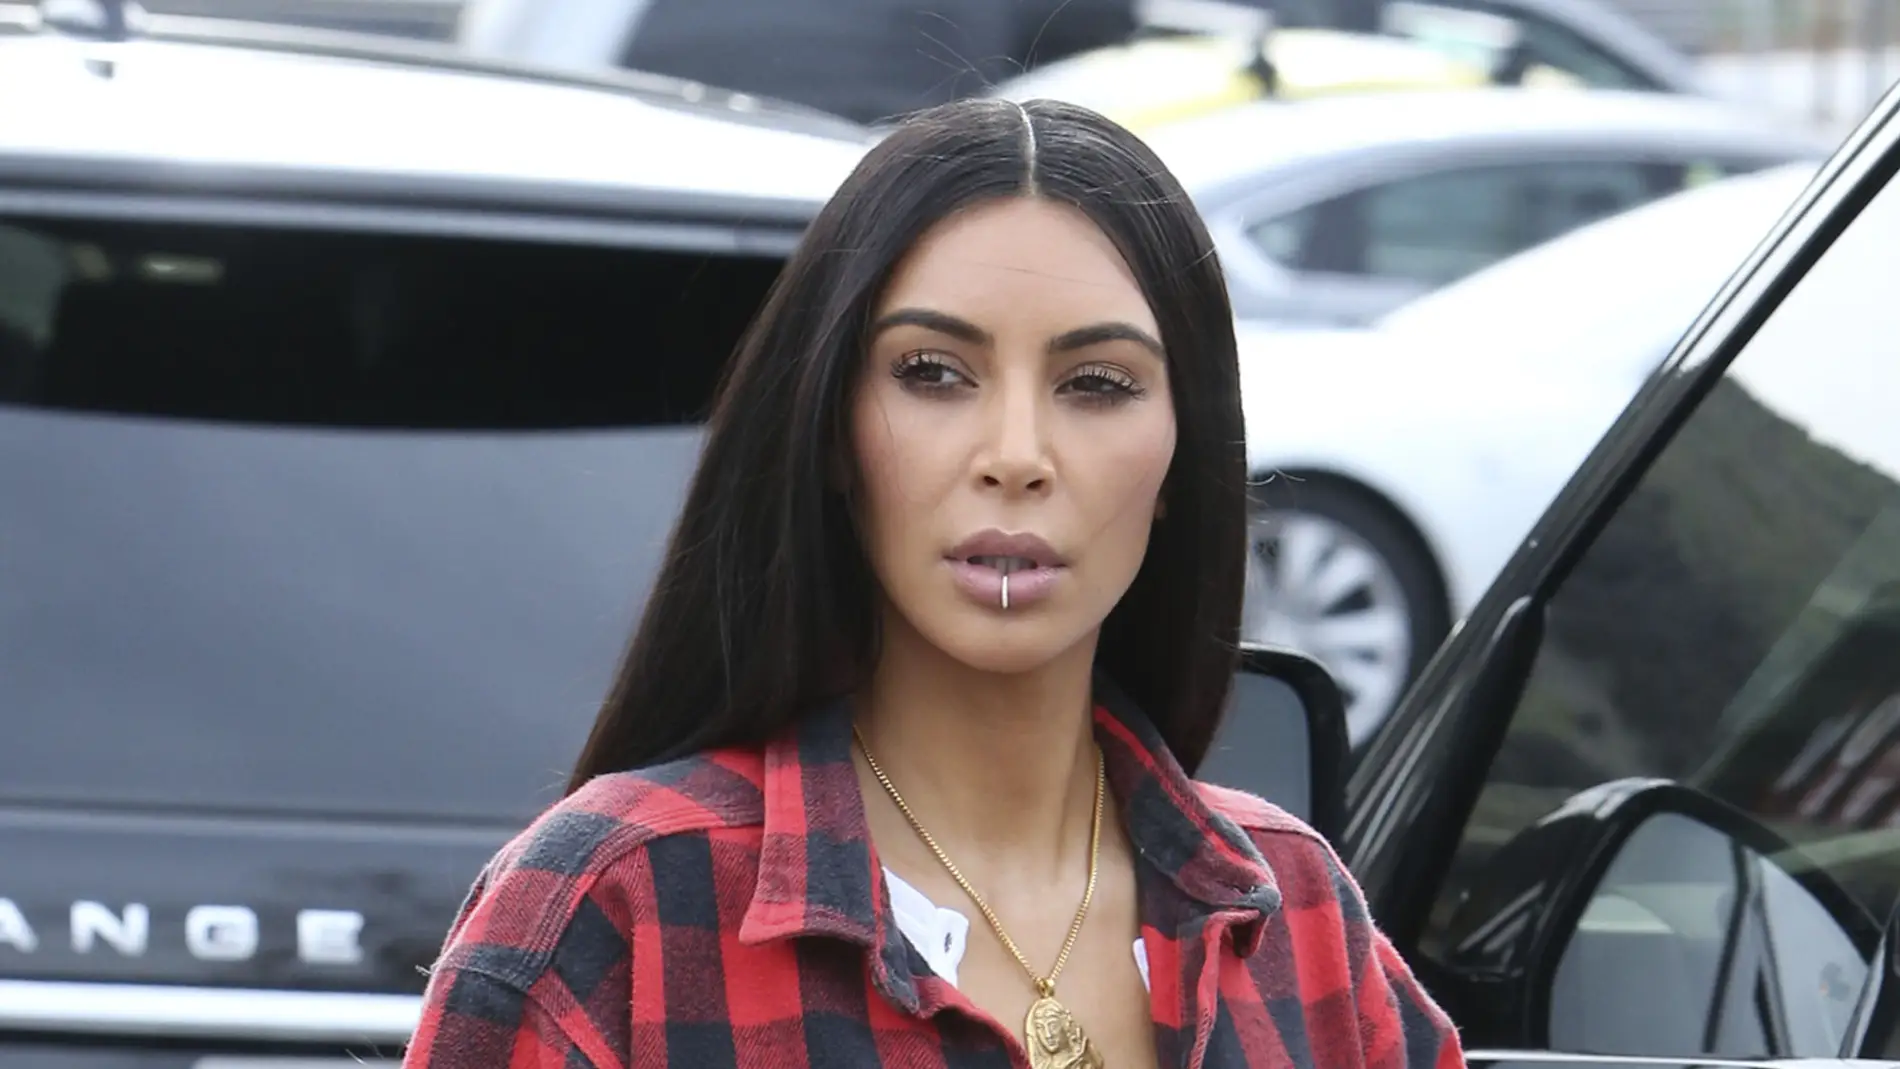 El nuevo 'pendiente' de Kim Kardashian